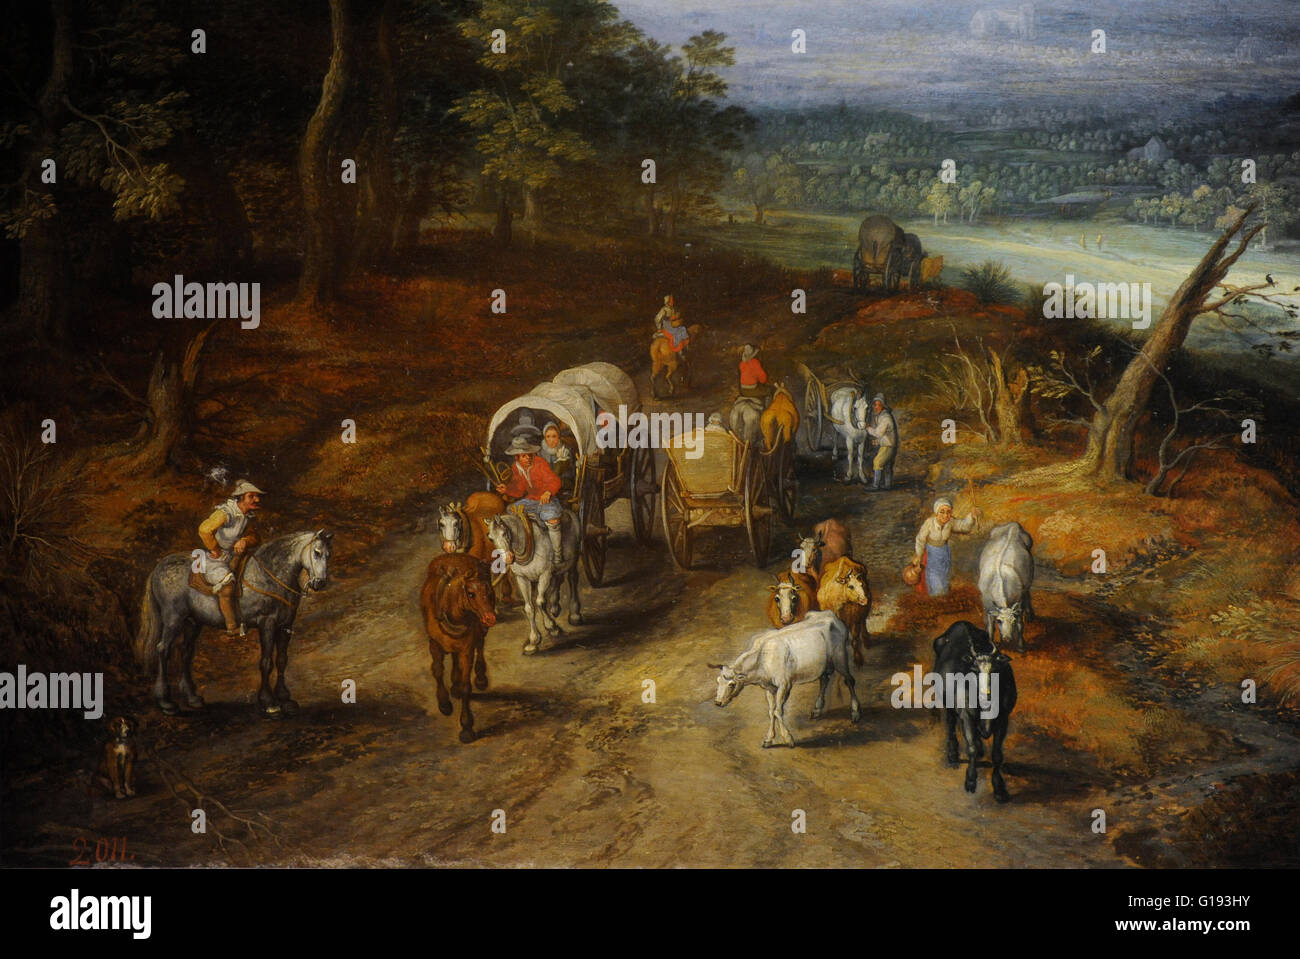 Jan Brueghel the Elder (Velvet Brueghel). 1568-1625. Flemish Painter. Country Road. Oil on panel. Barroque. The State Hermitage Museum. Saint Petersburg. Russia. Detail. Stock Photo